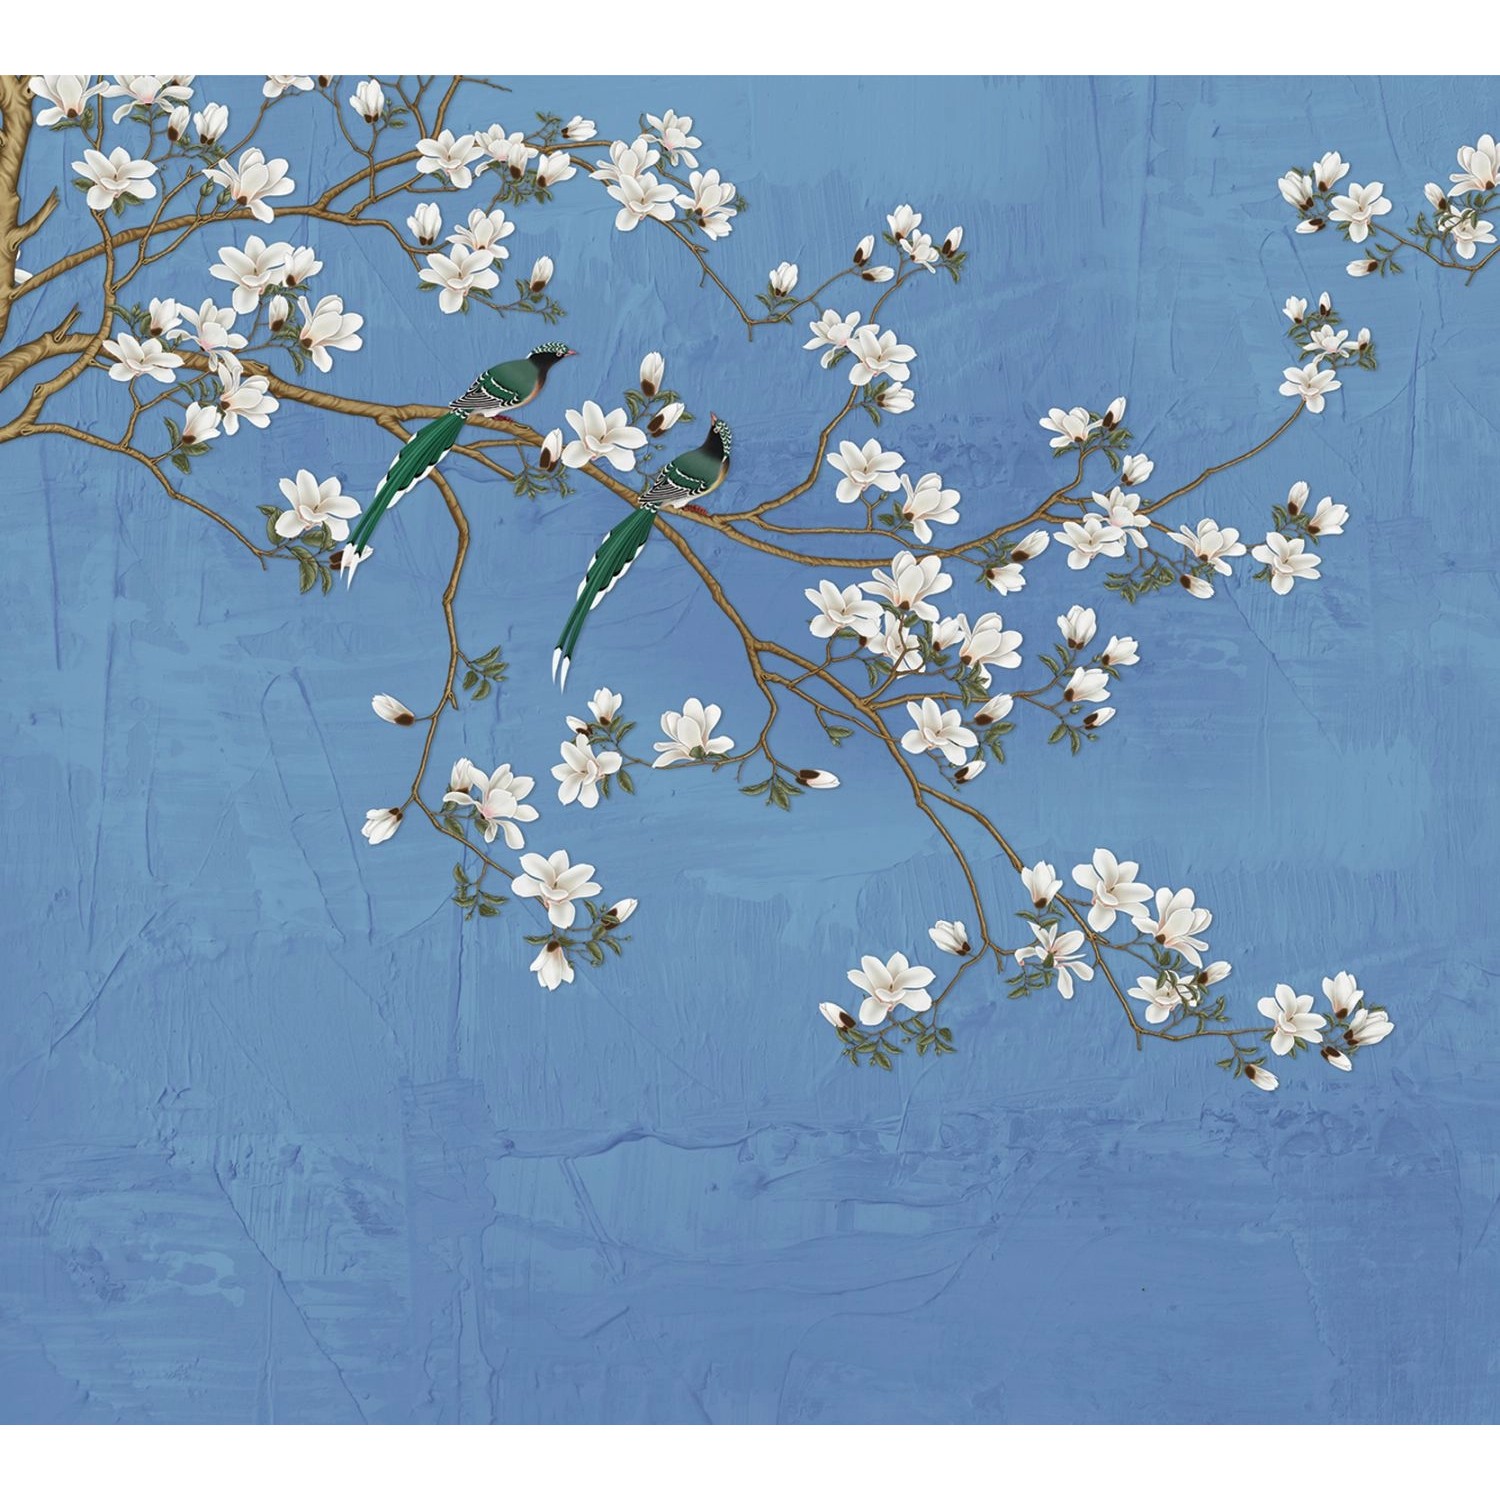 Sanders & Sanders Fototapete Blütenzweige Graublau 3 x 2,7 m 601176 günstig online kaufen